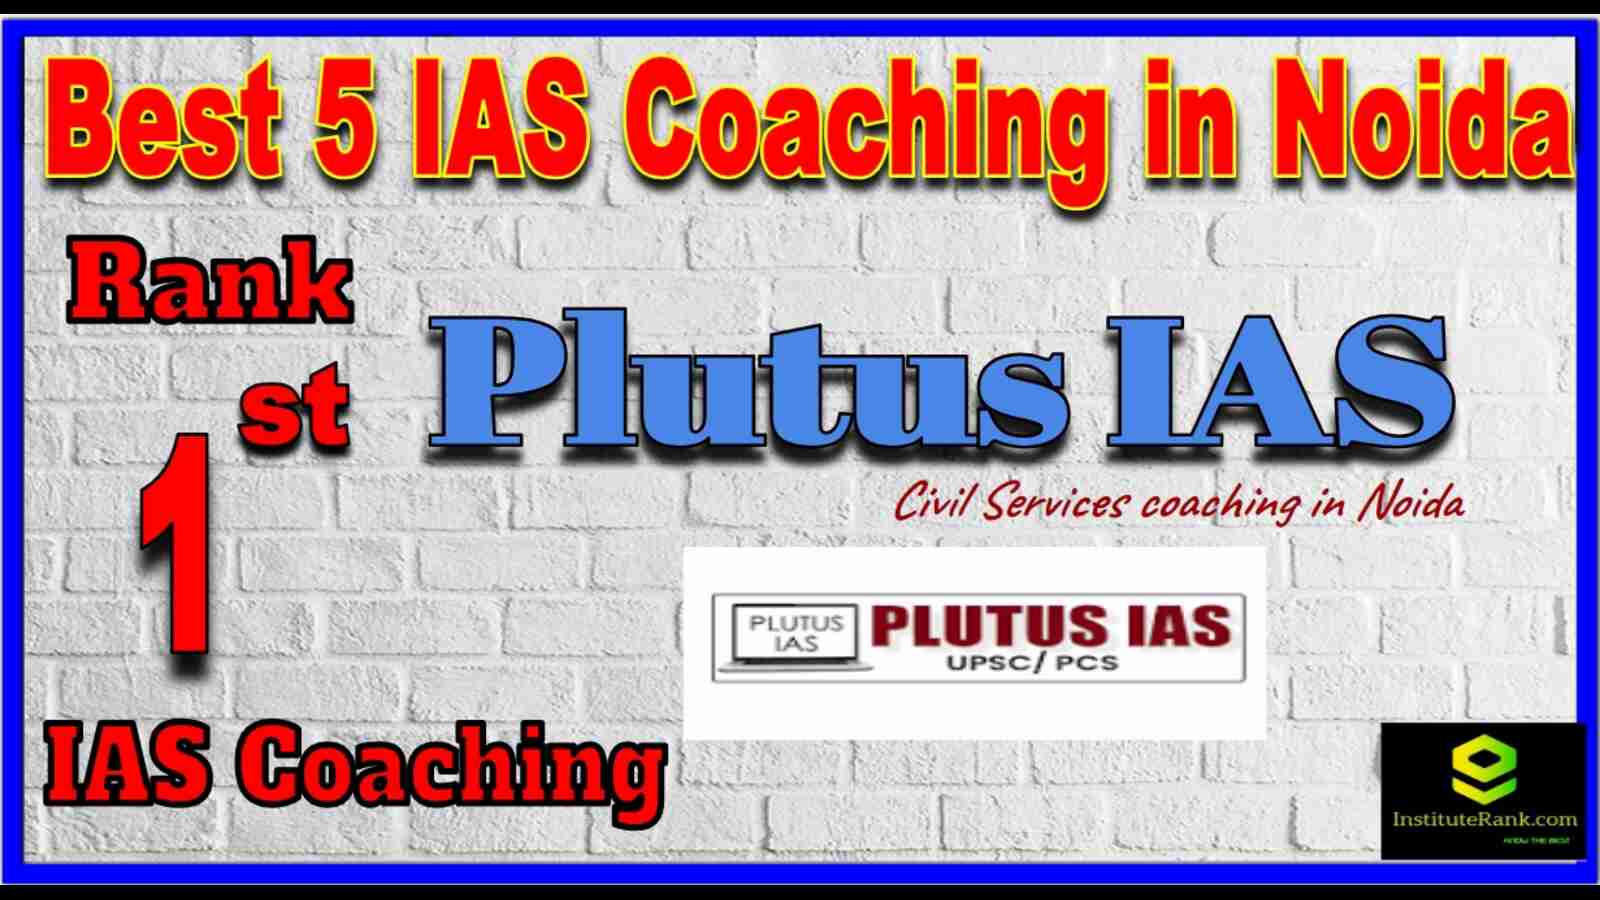 Rank 1 Best IAS Coaching in Noida PLUTUS IAS